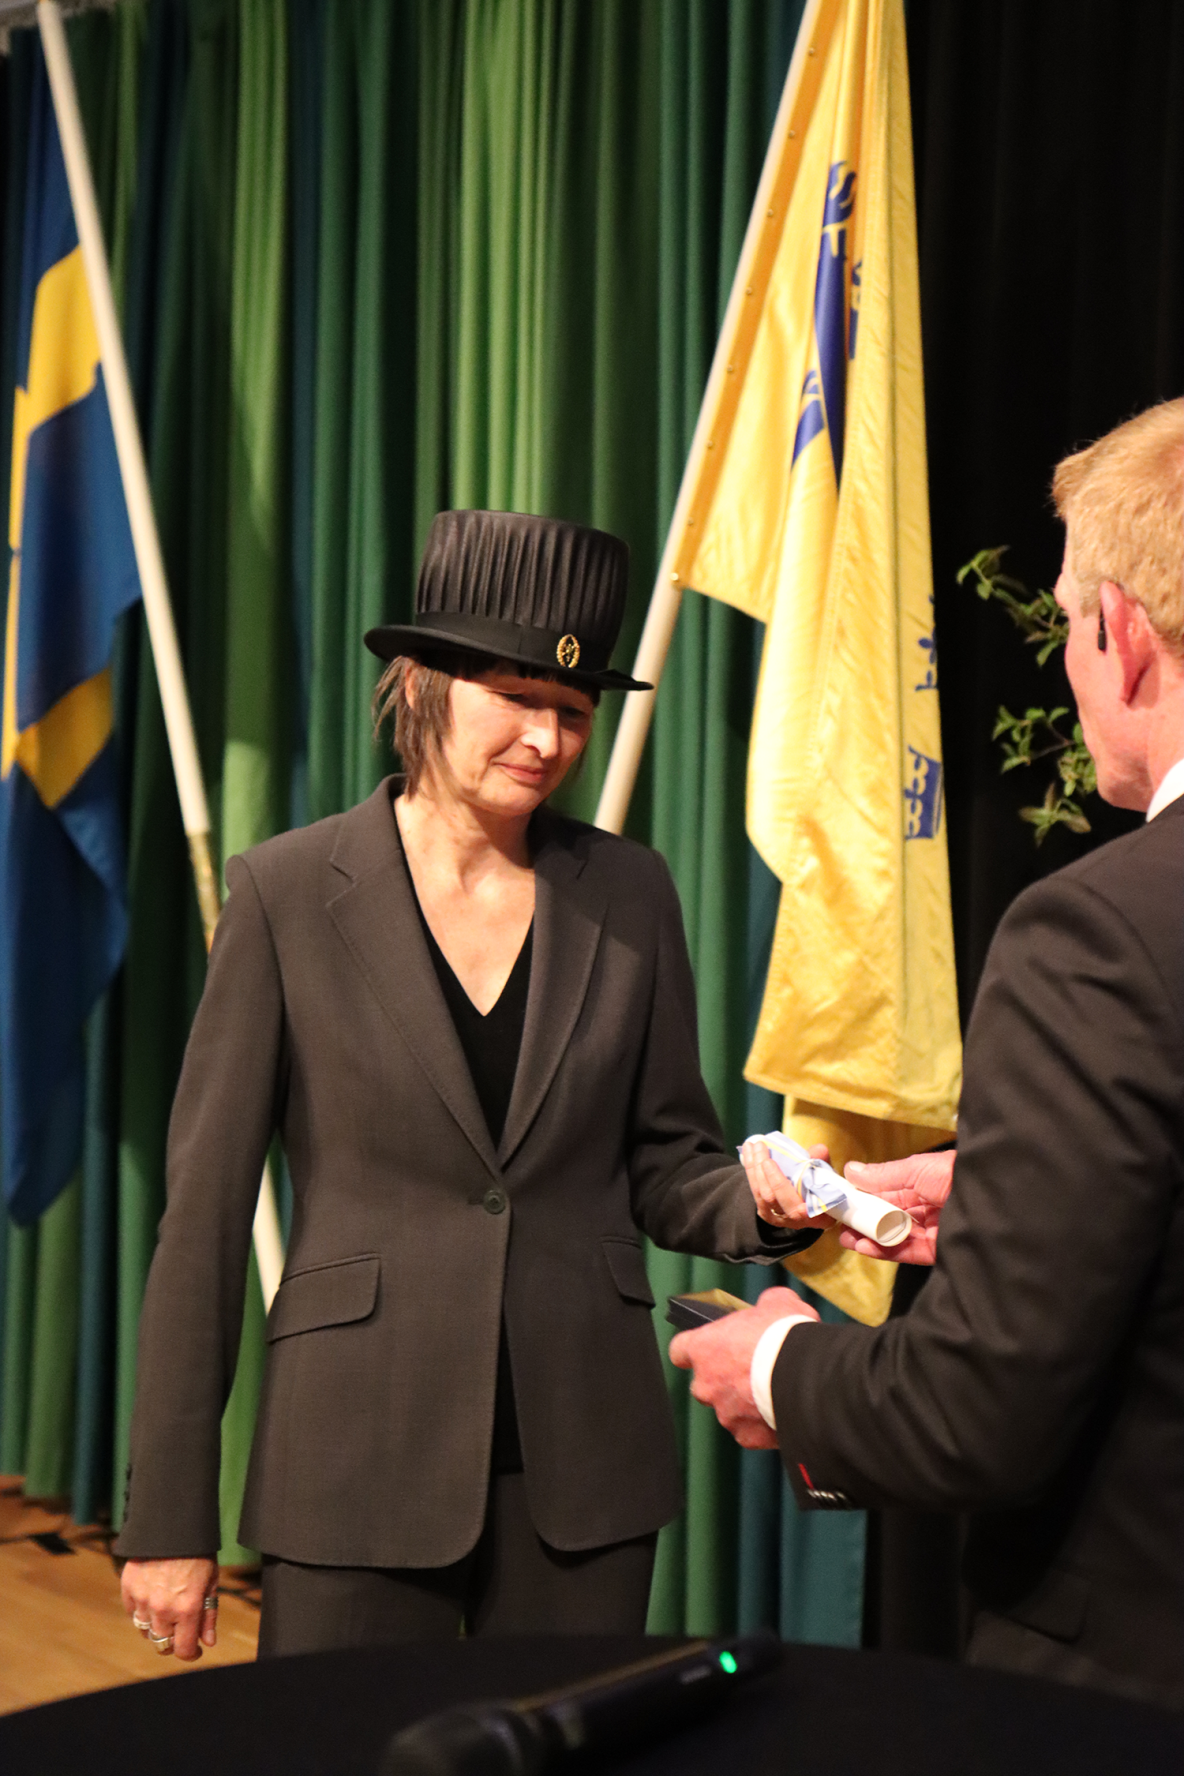 Professor receiving her honorary doctorate